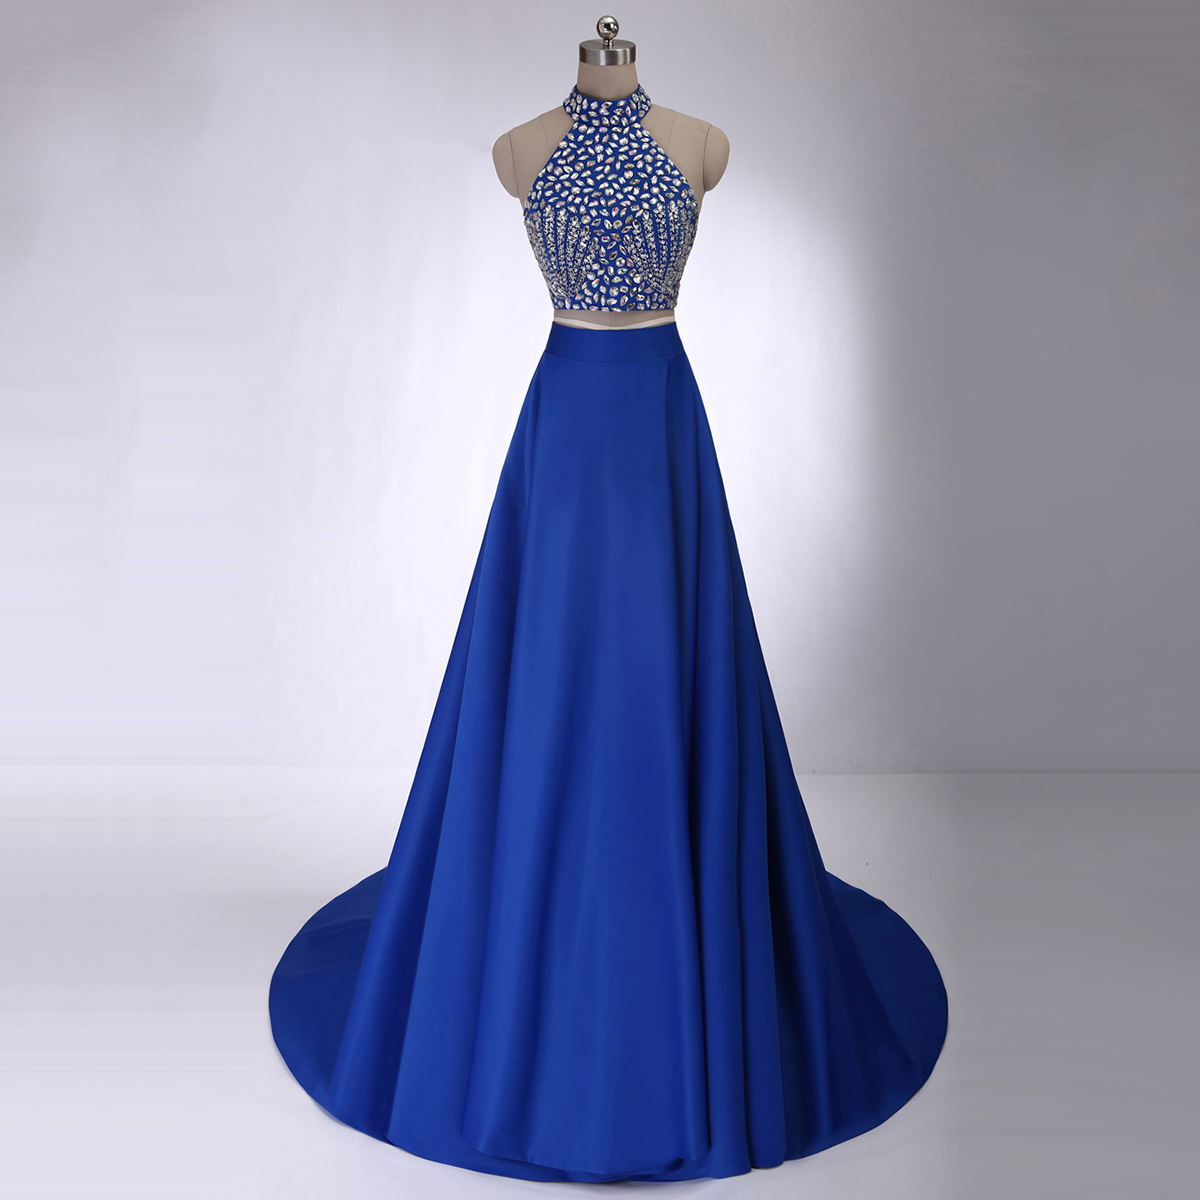 royal blue high neck prom dress